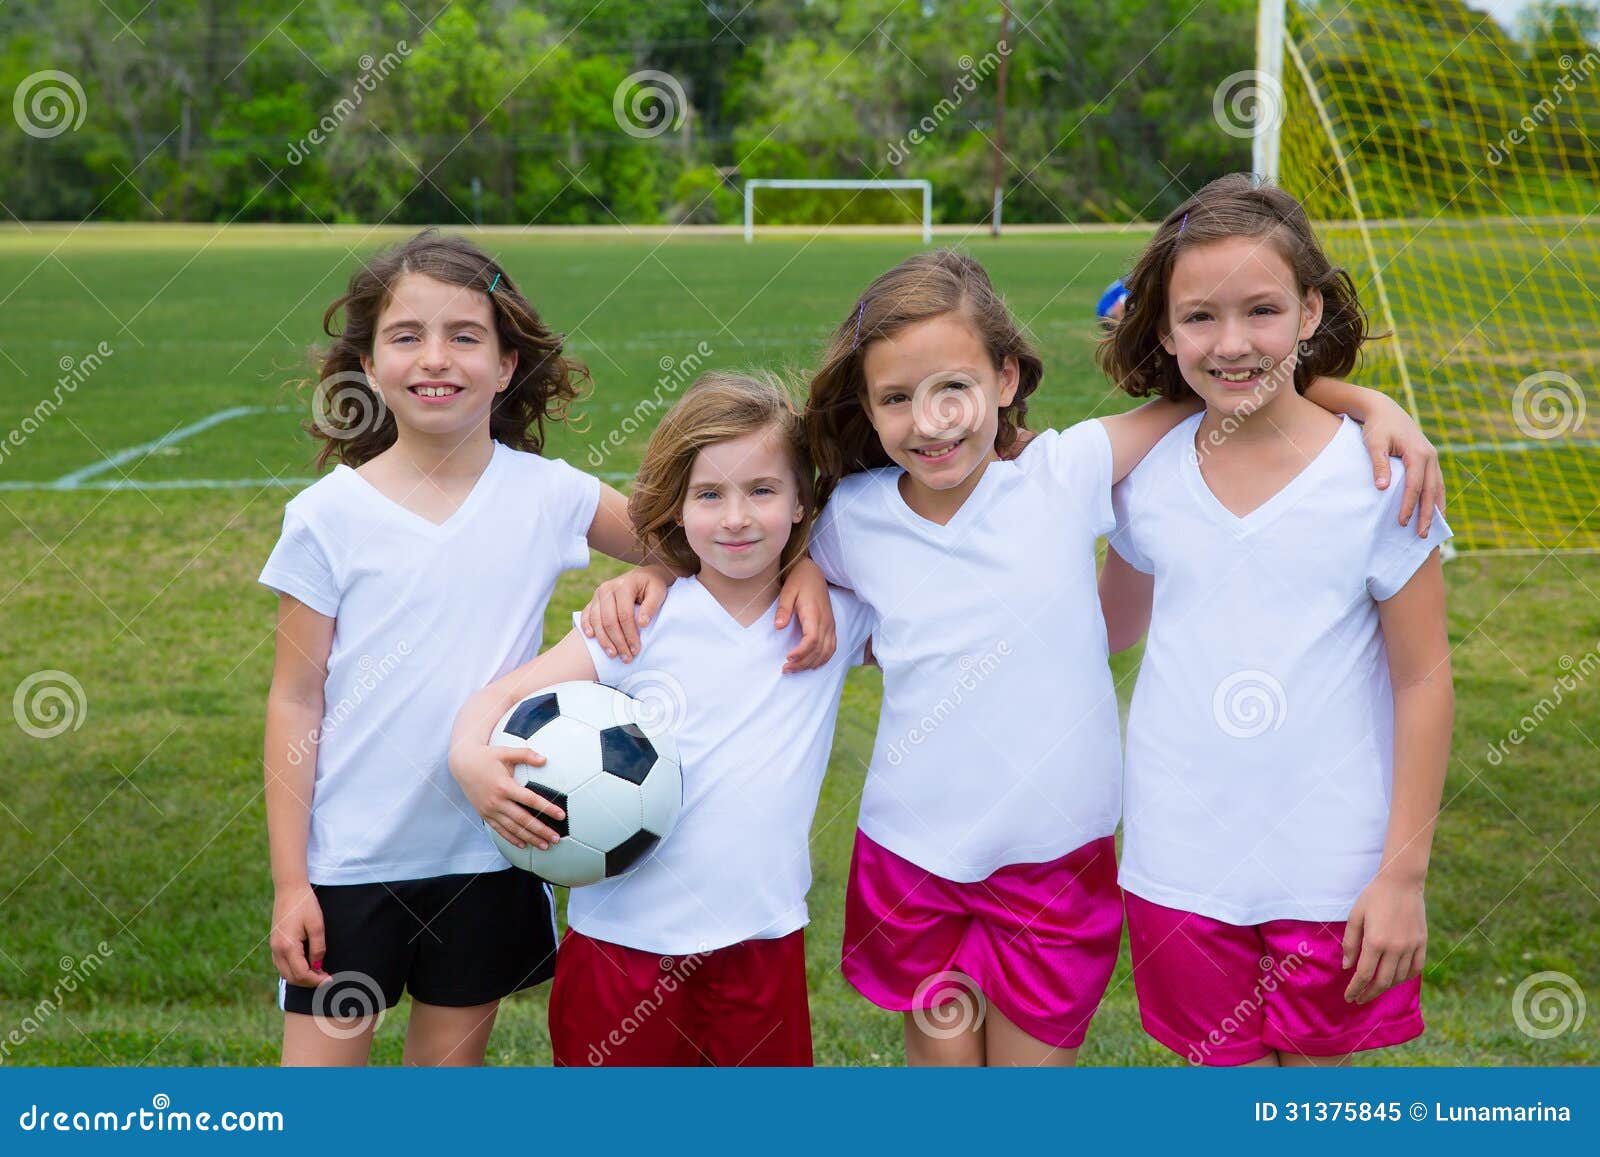 soccer football kid girls team at sports fileld